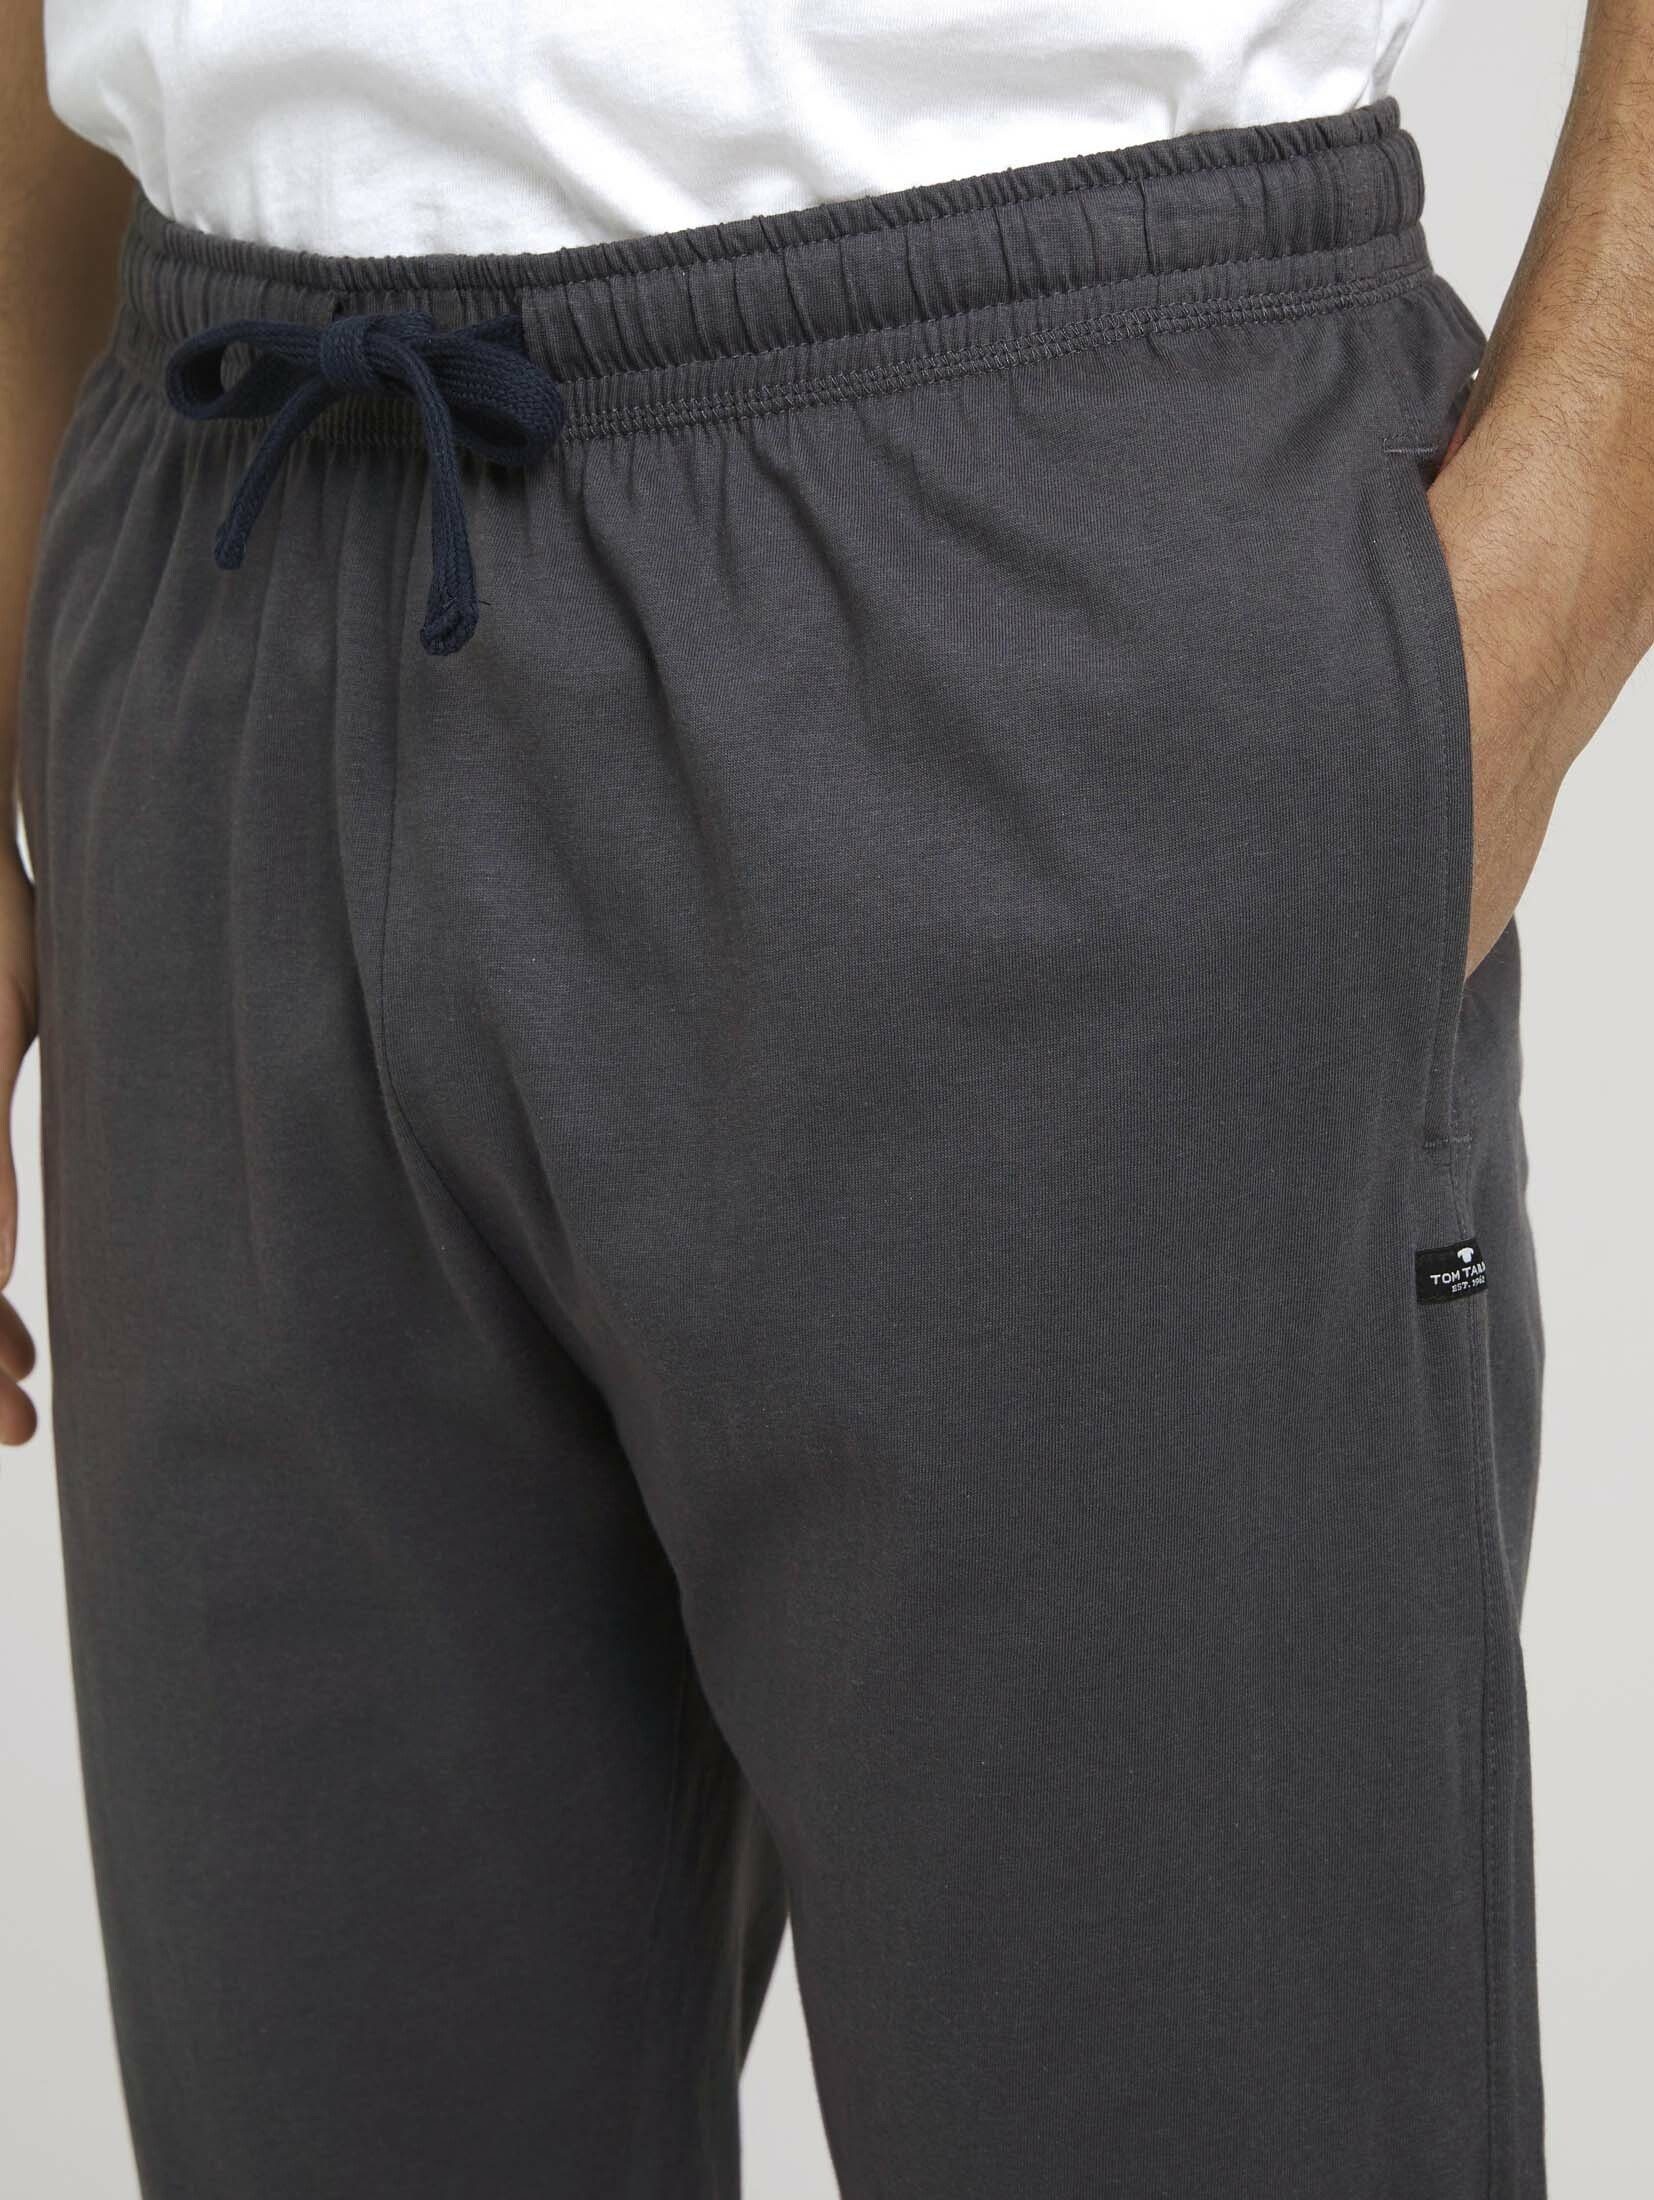 TOM TAILOR Schlafhose Pyjama grey-dark-solid Hose